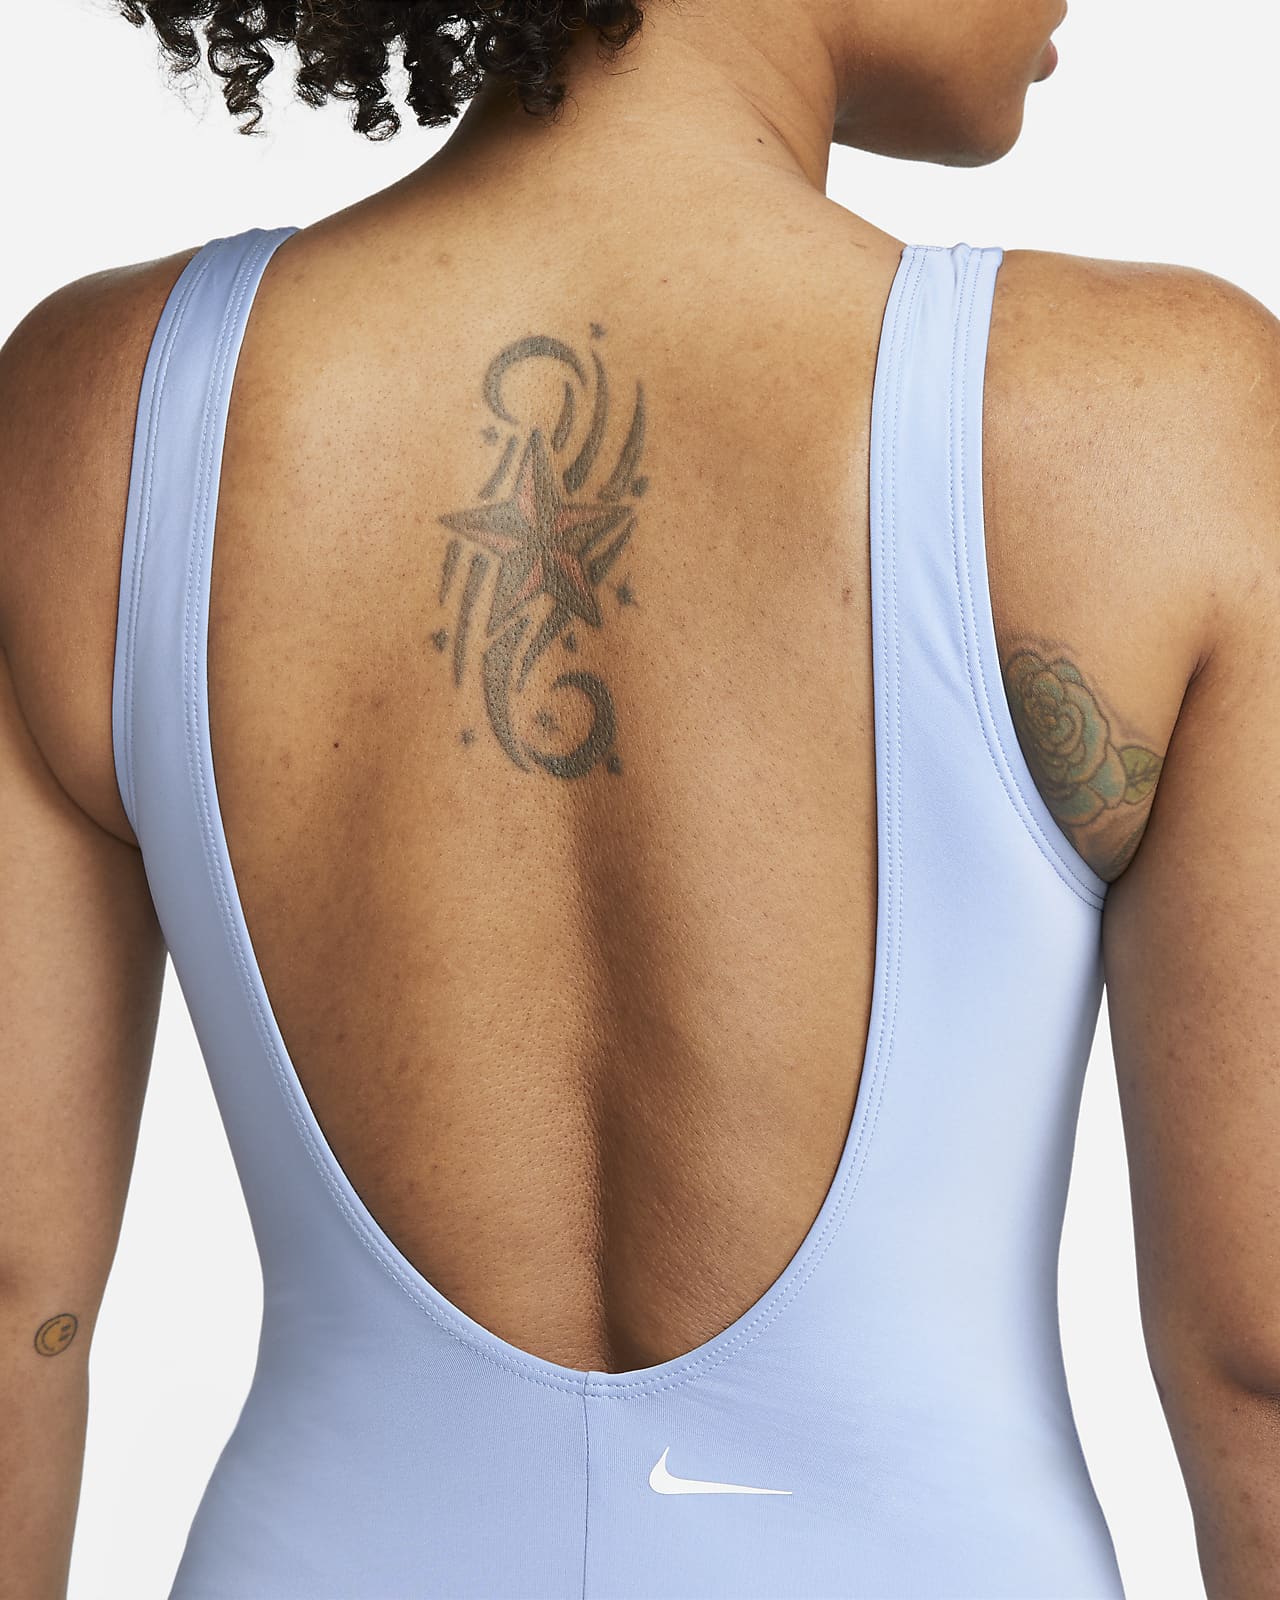 Nike Women's U-Back Logo One Piece Swimsuit